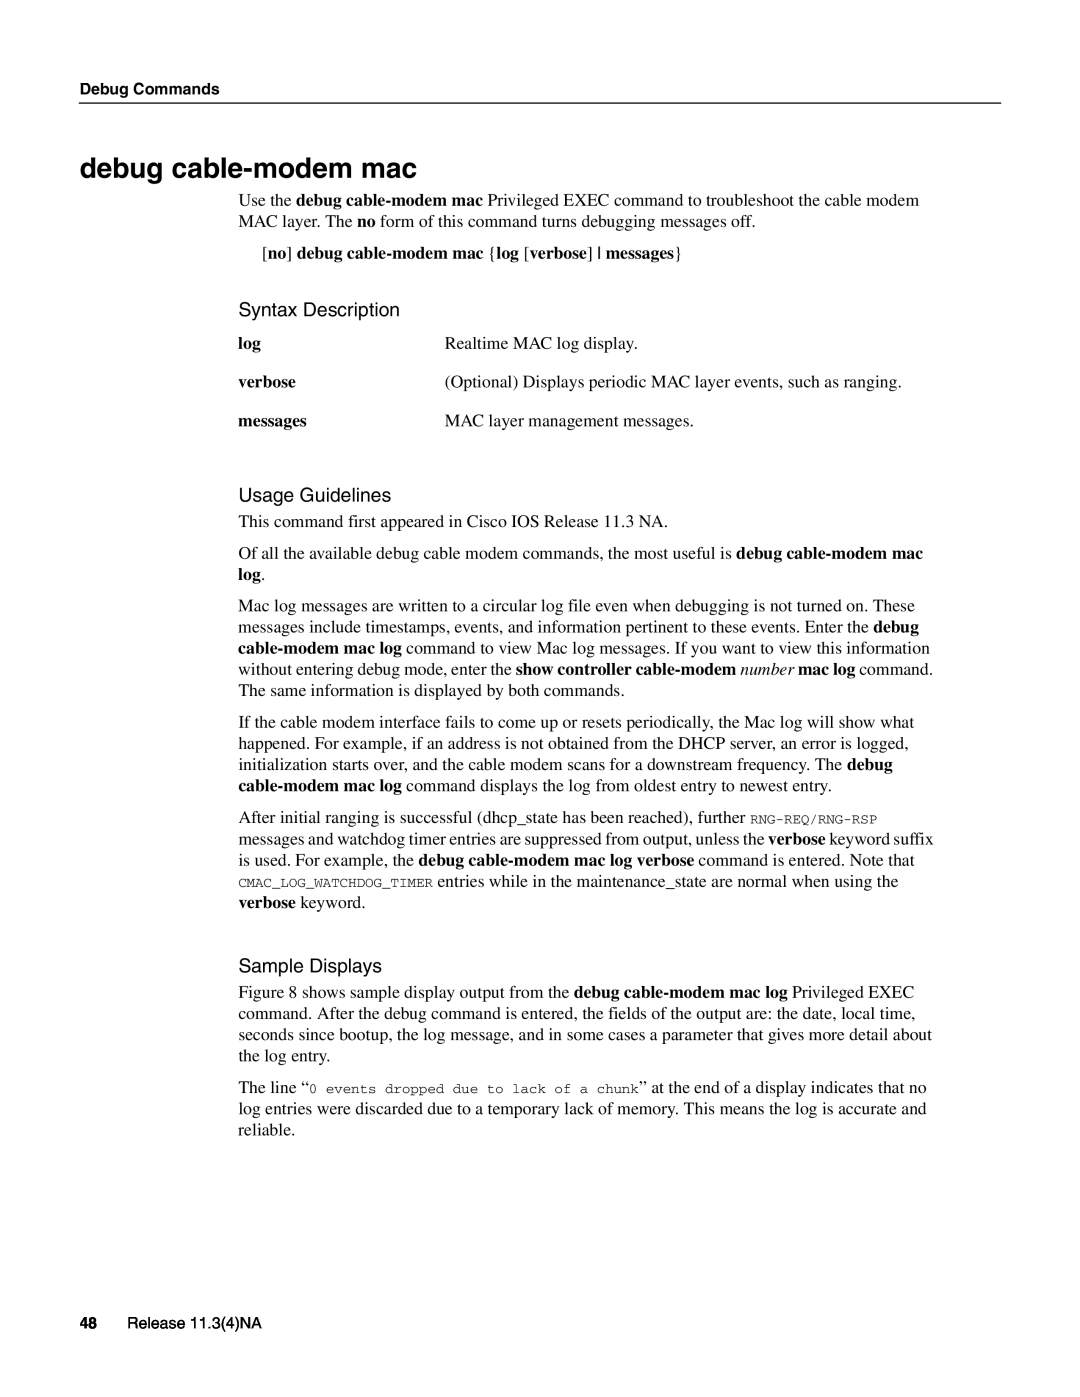 Cisco Systems UBR904 manual no debug cable-modem mac log verbose messages, Realtime MAC log display, Syntax Description 